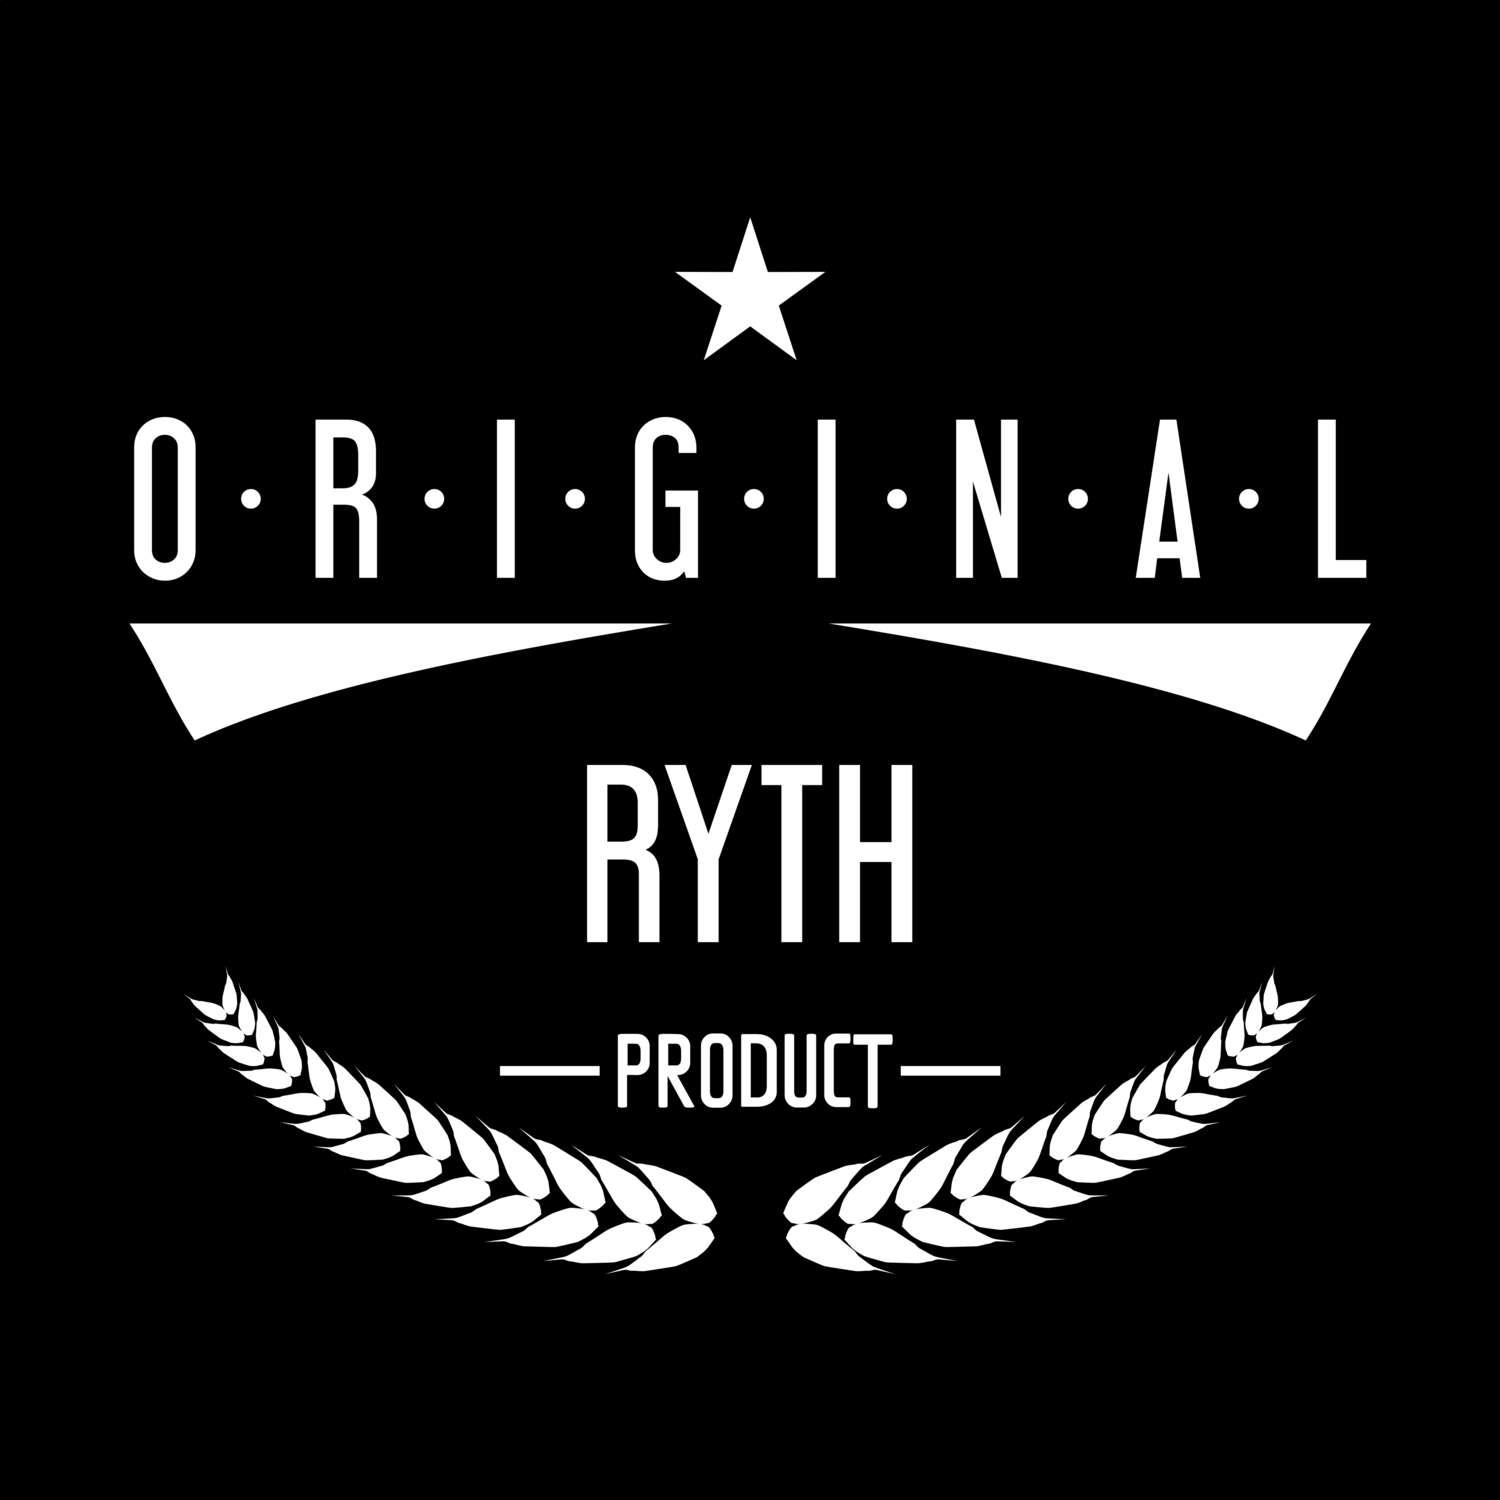 Ryth T-Shirt »Original Product«